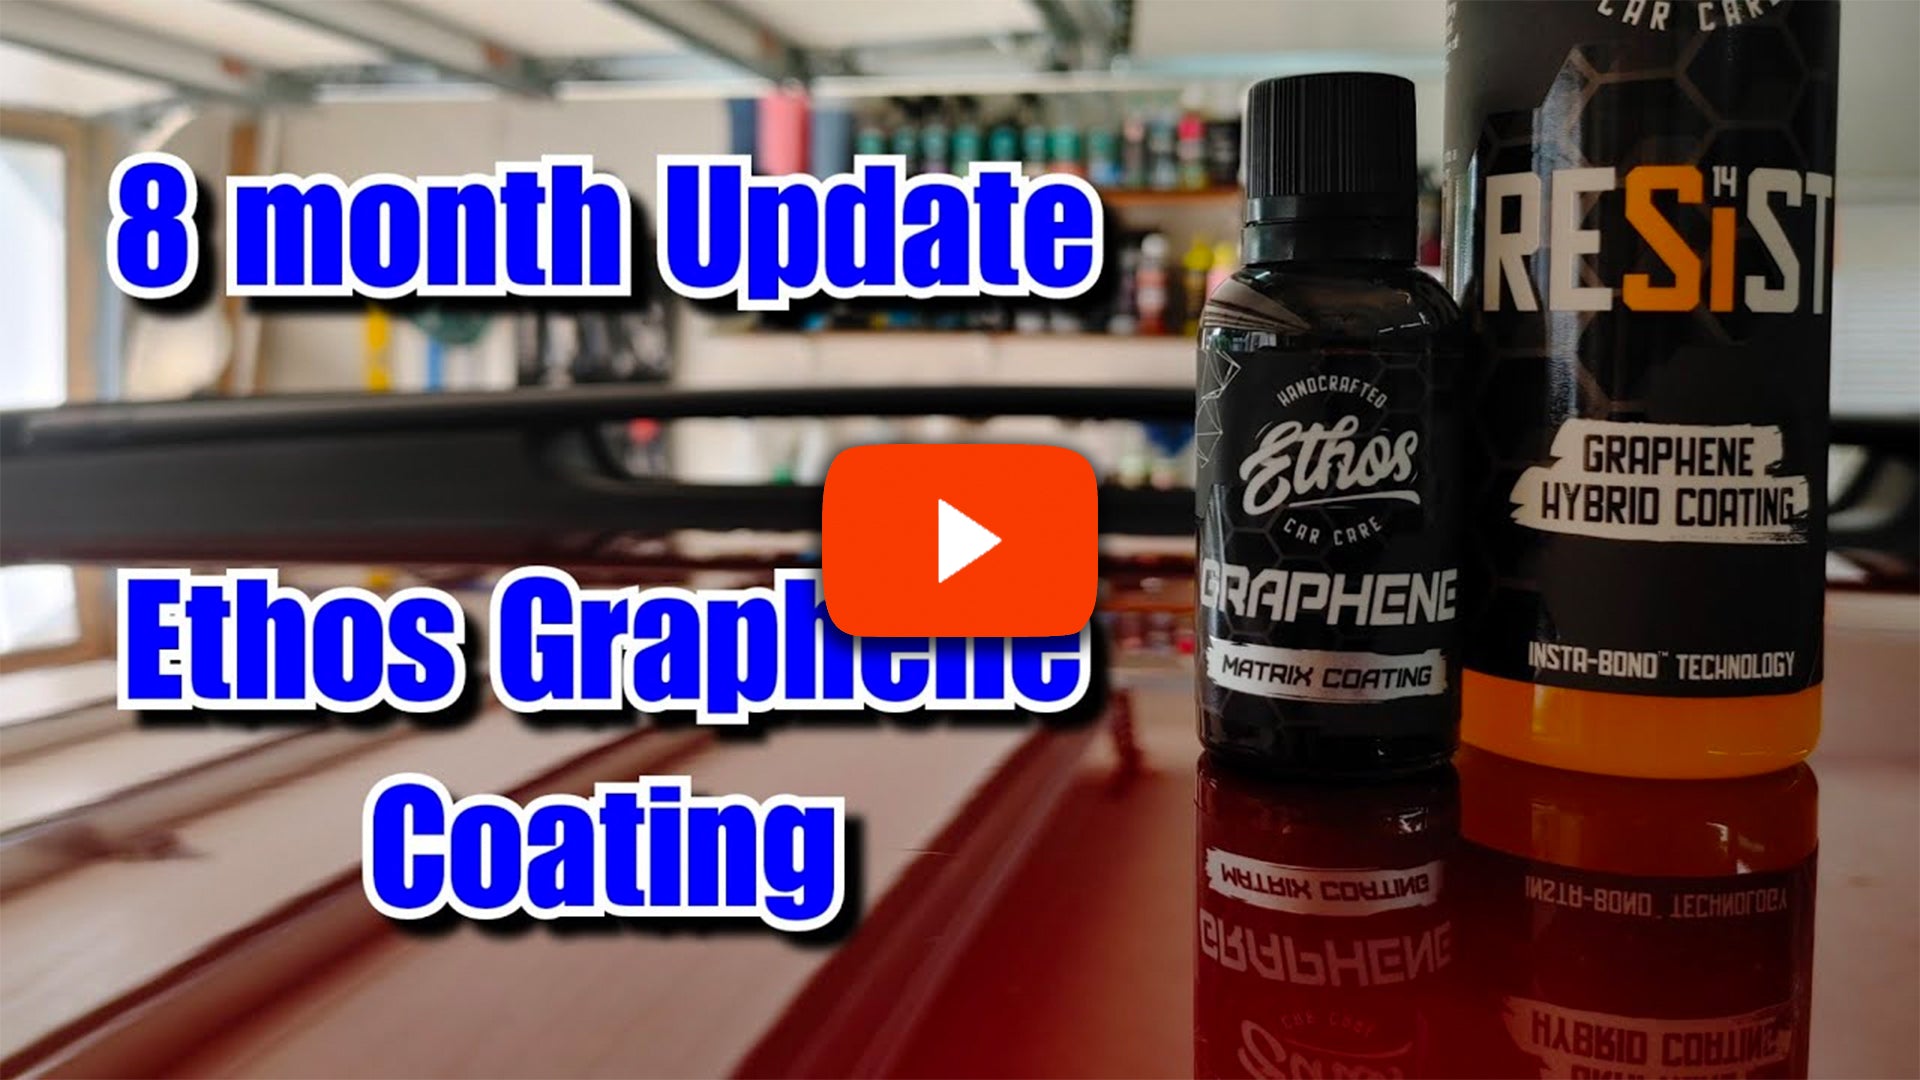 Graphene Matrix Coating 8 Month Update!